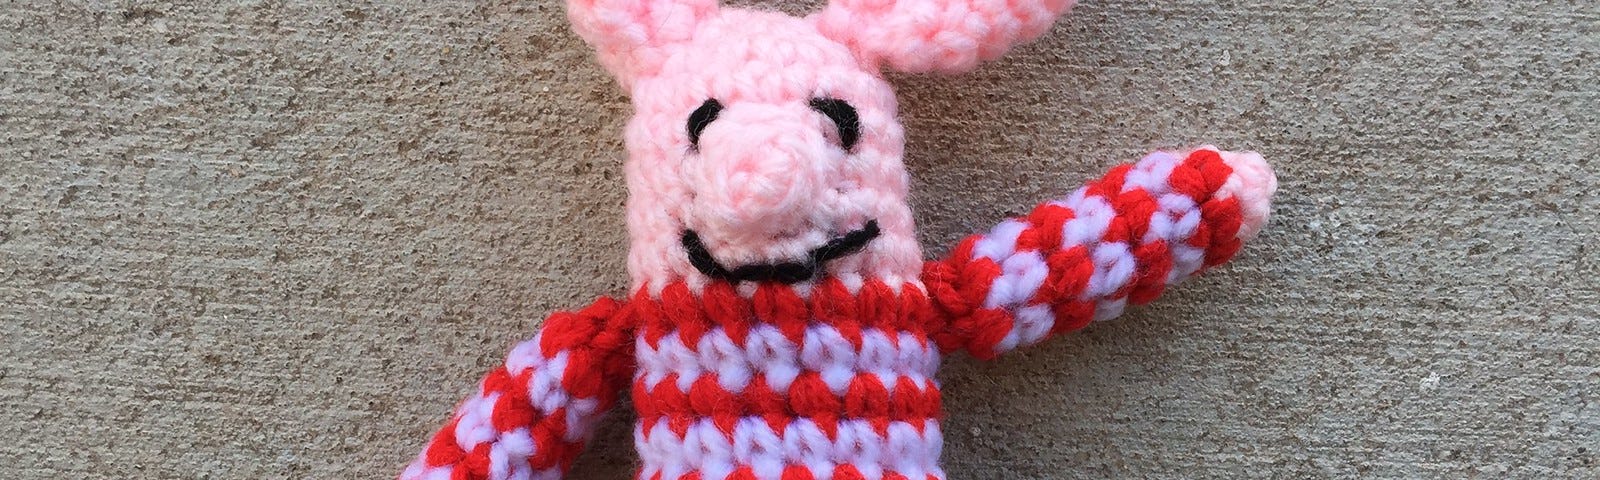 A miniature meta crochet pig named Olivette